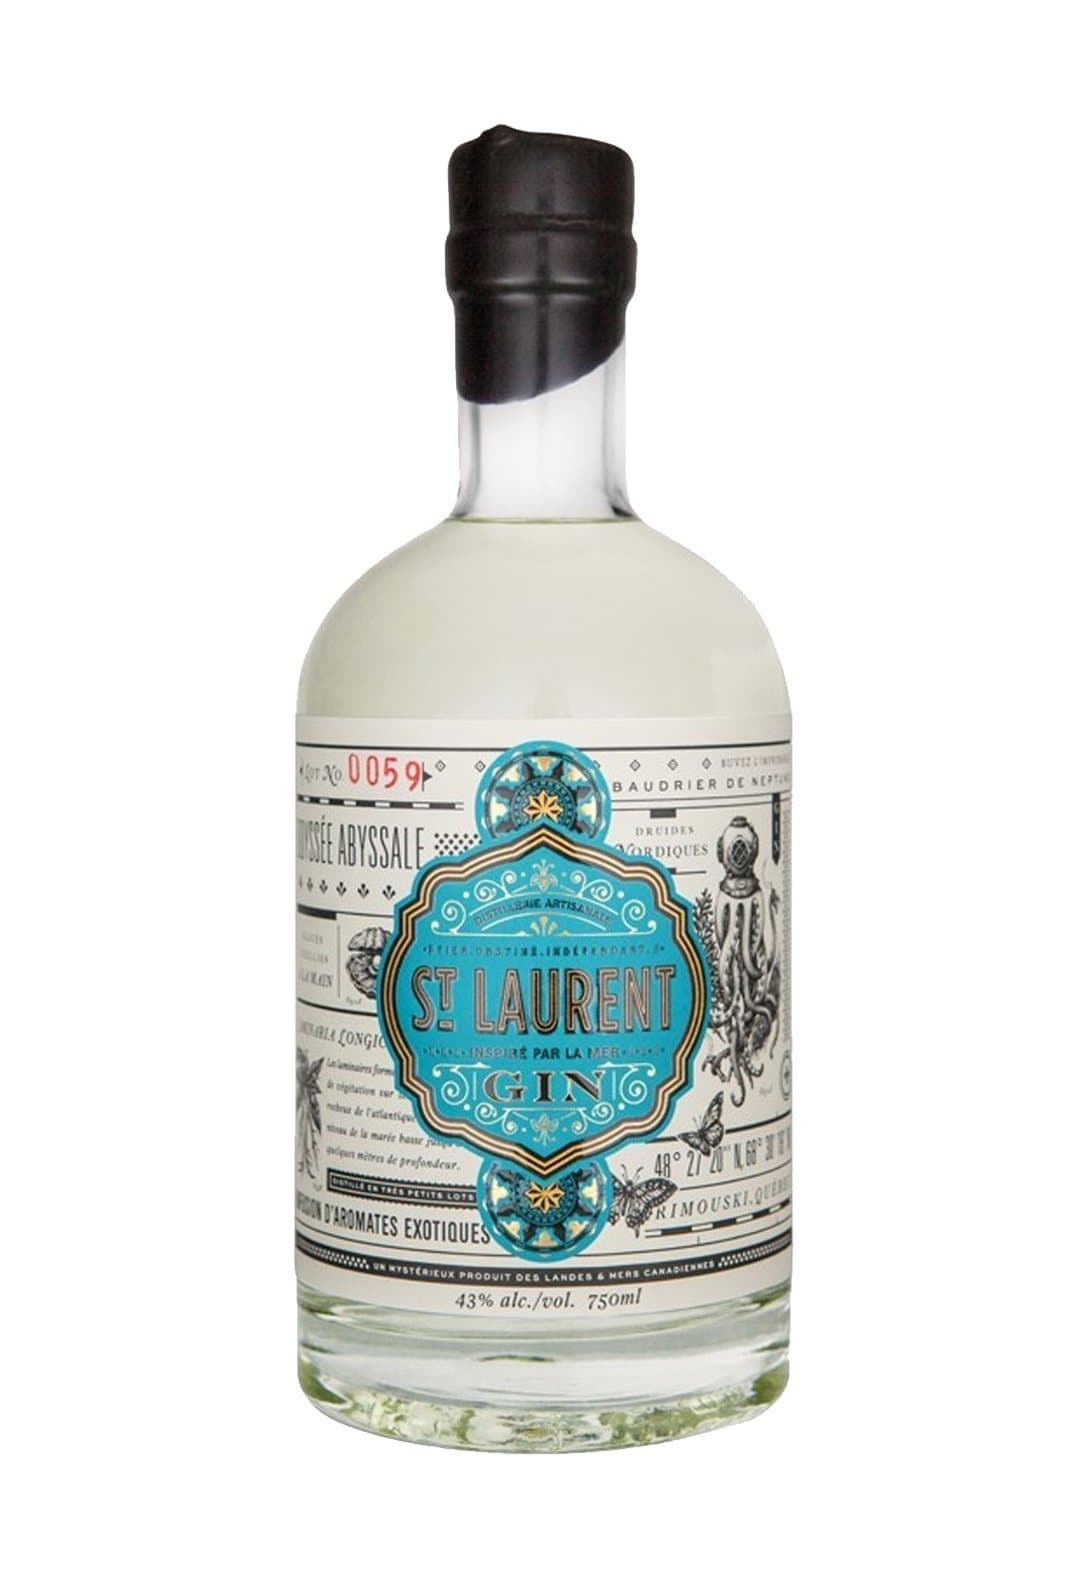 St. Laurent Gin 43% 700ml | Gin | Shop online at Spirits of France